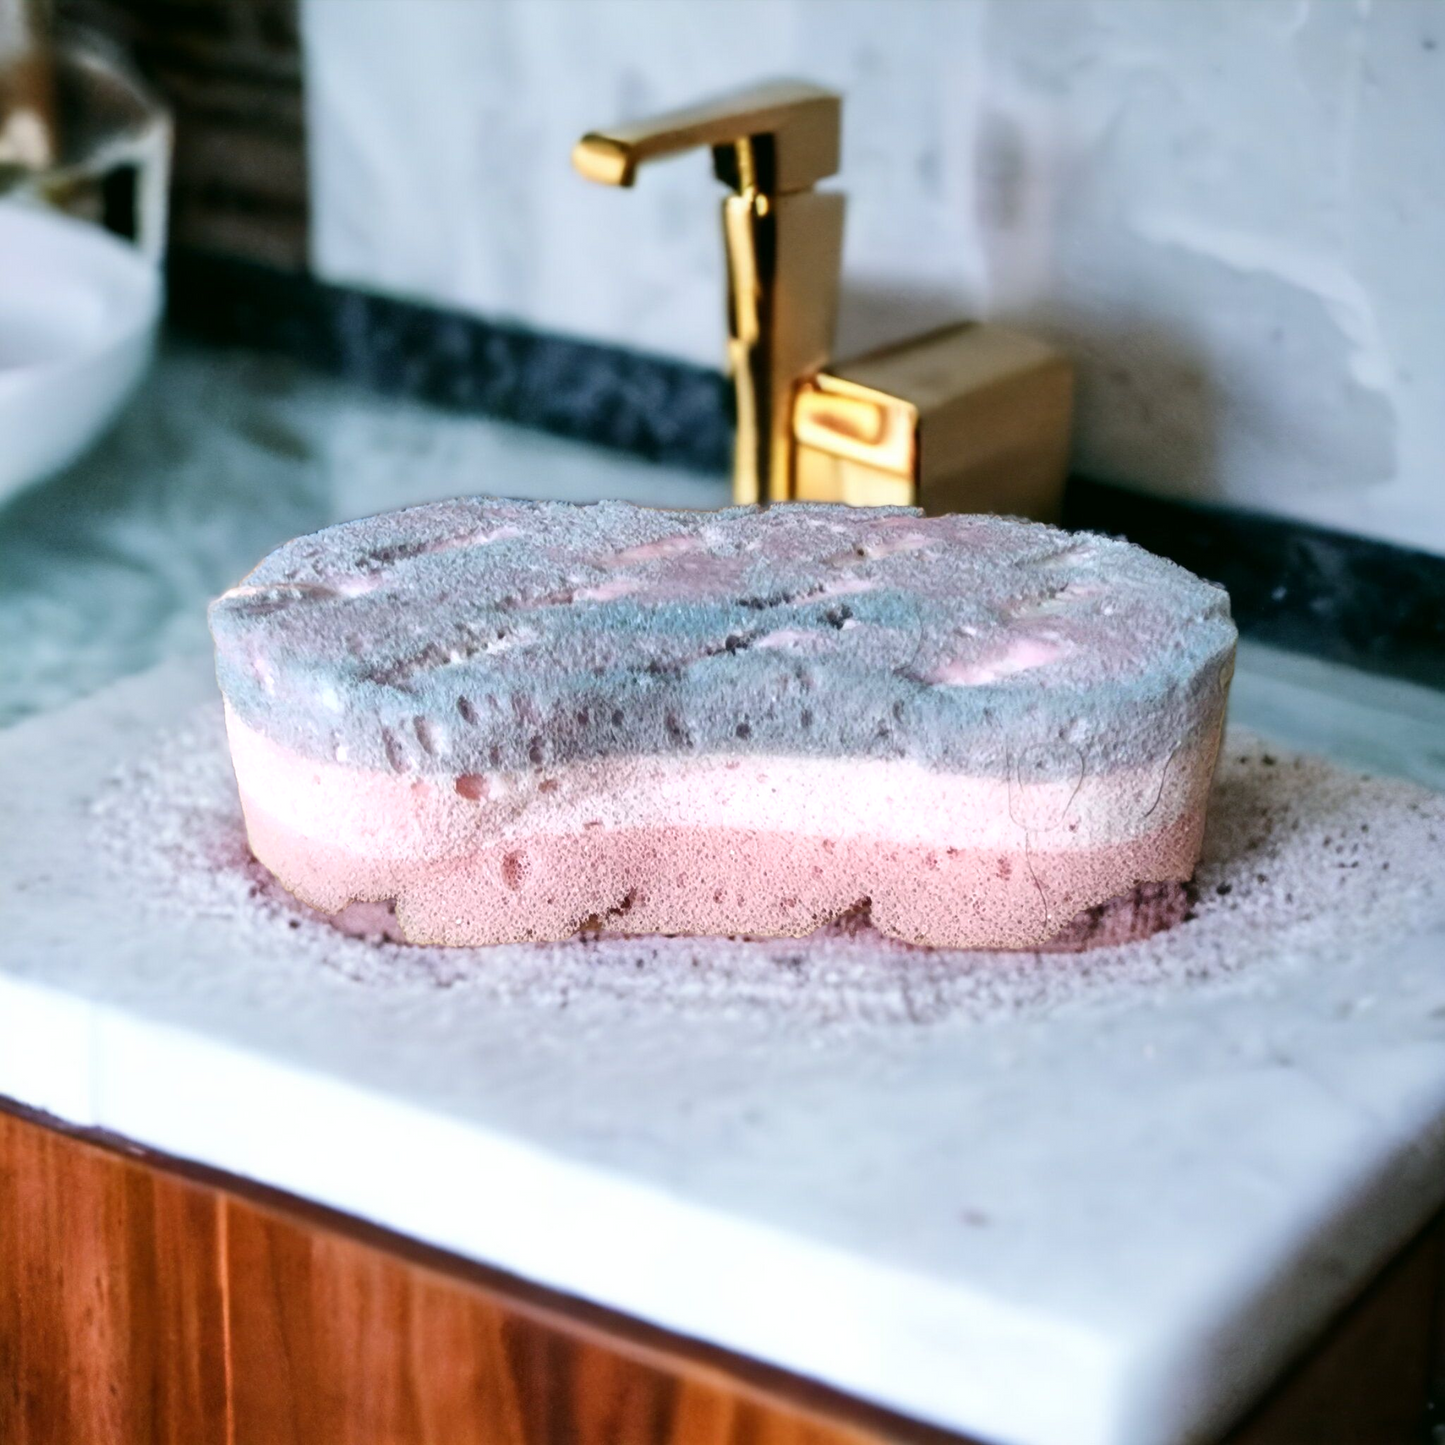 'Orange Mint' Goat's Milk Soap Infused Bath Sponge